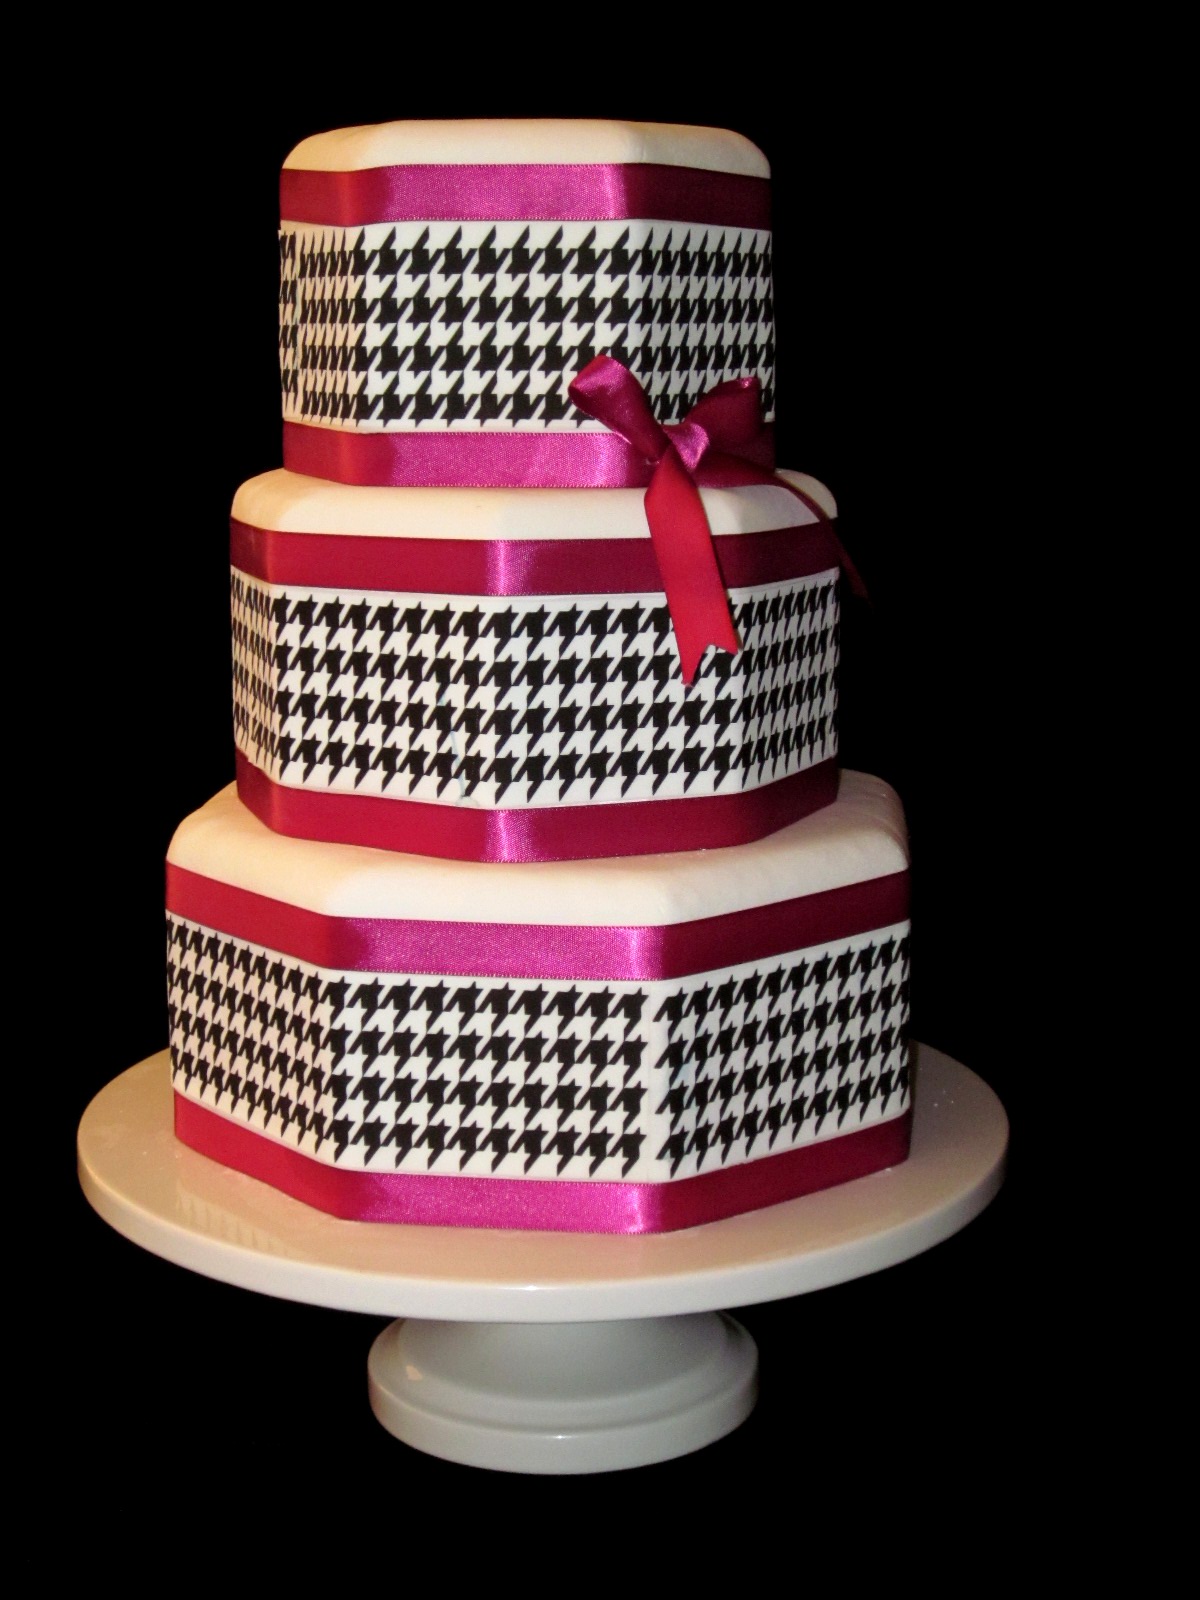 Hot Pink and Black Birthday Cake